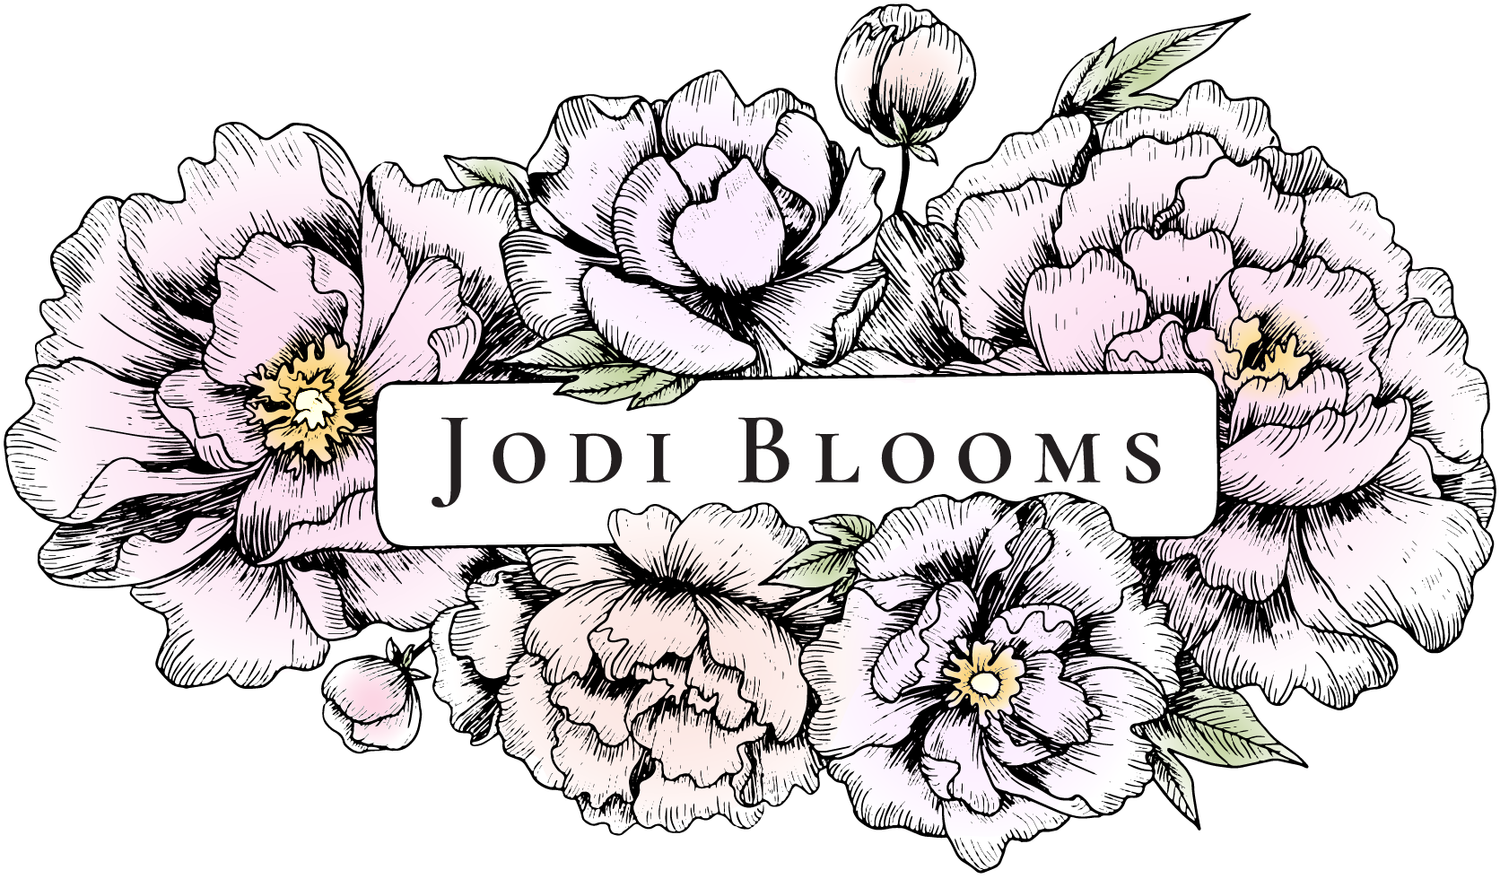 Jodi Blooms